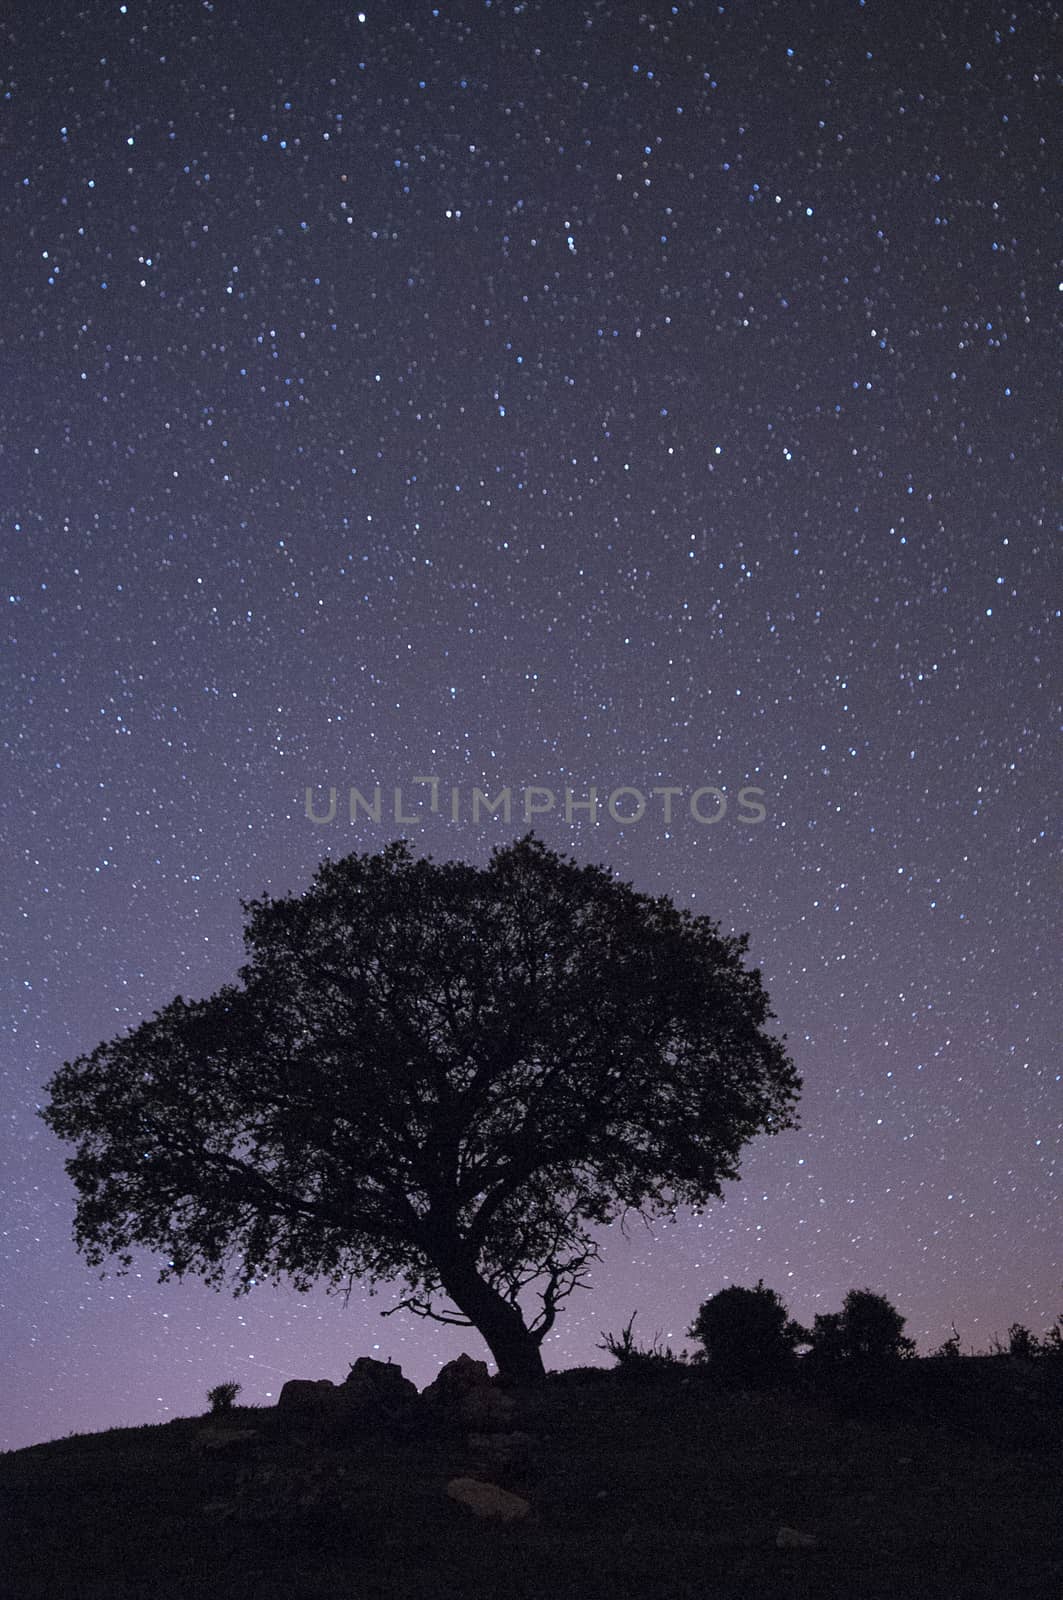 Night landscape, oak, stars, clouds, silhouette by jalonsohu@gmail.com